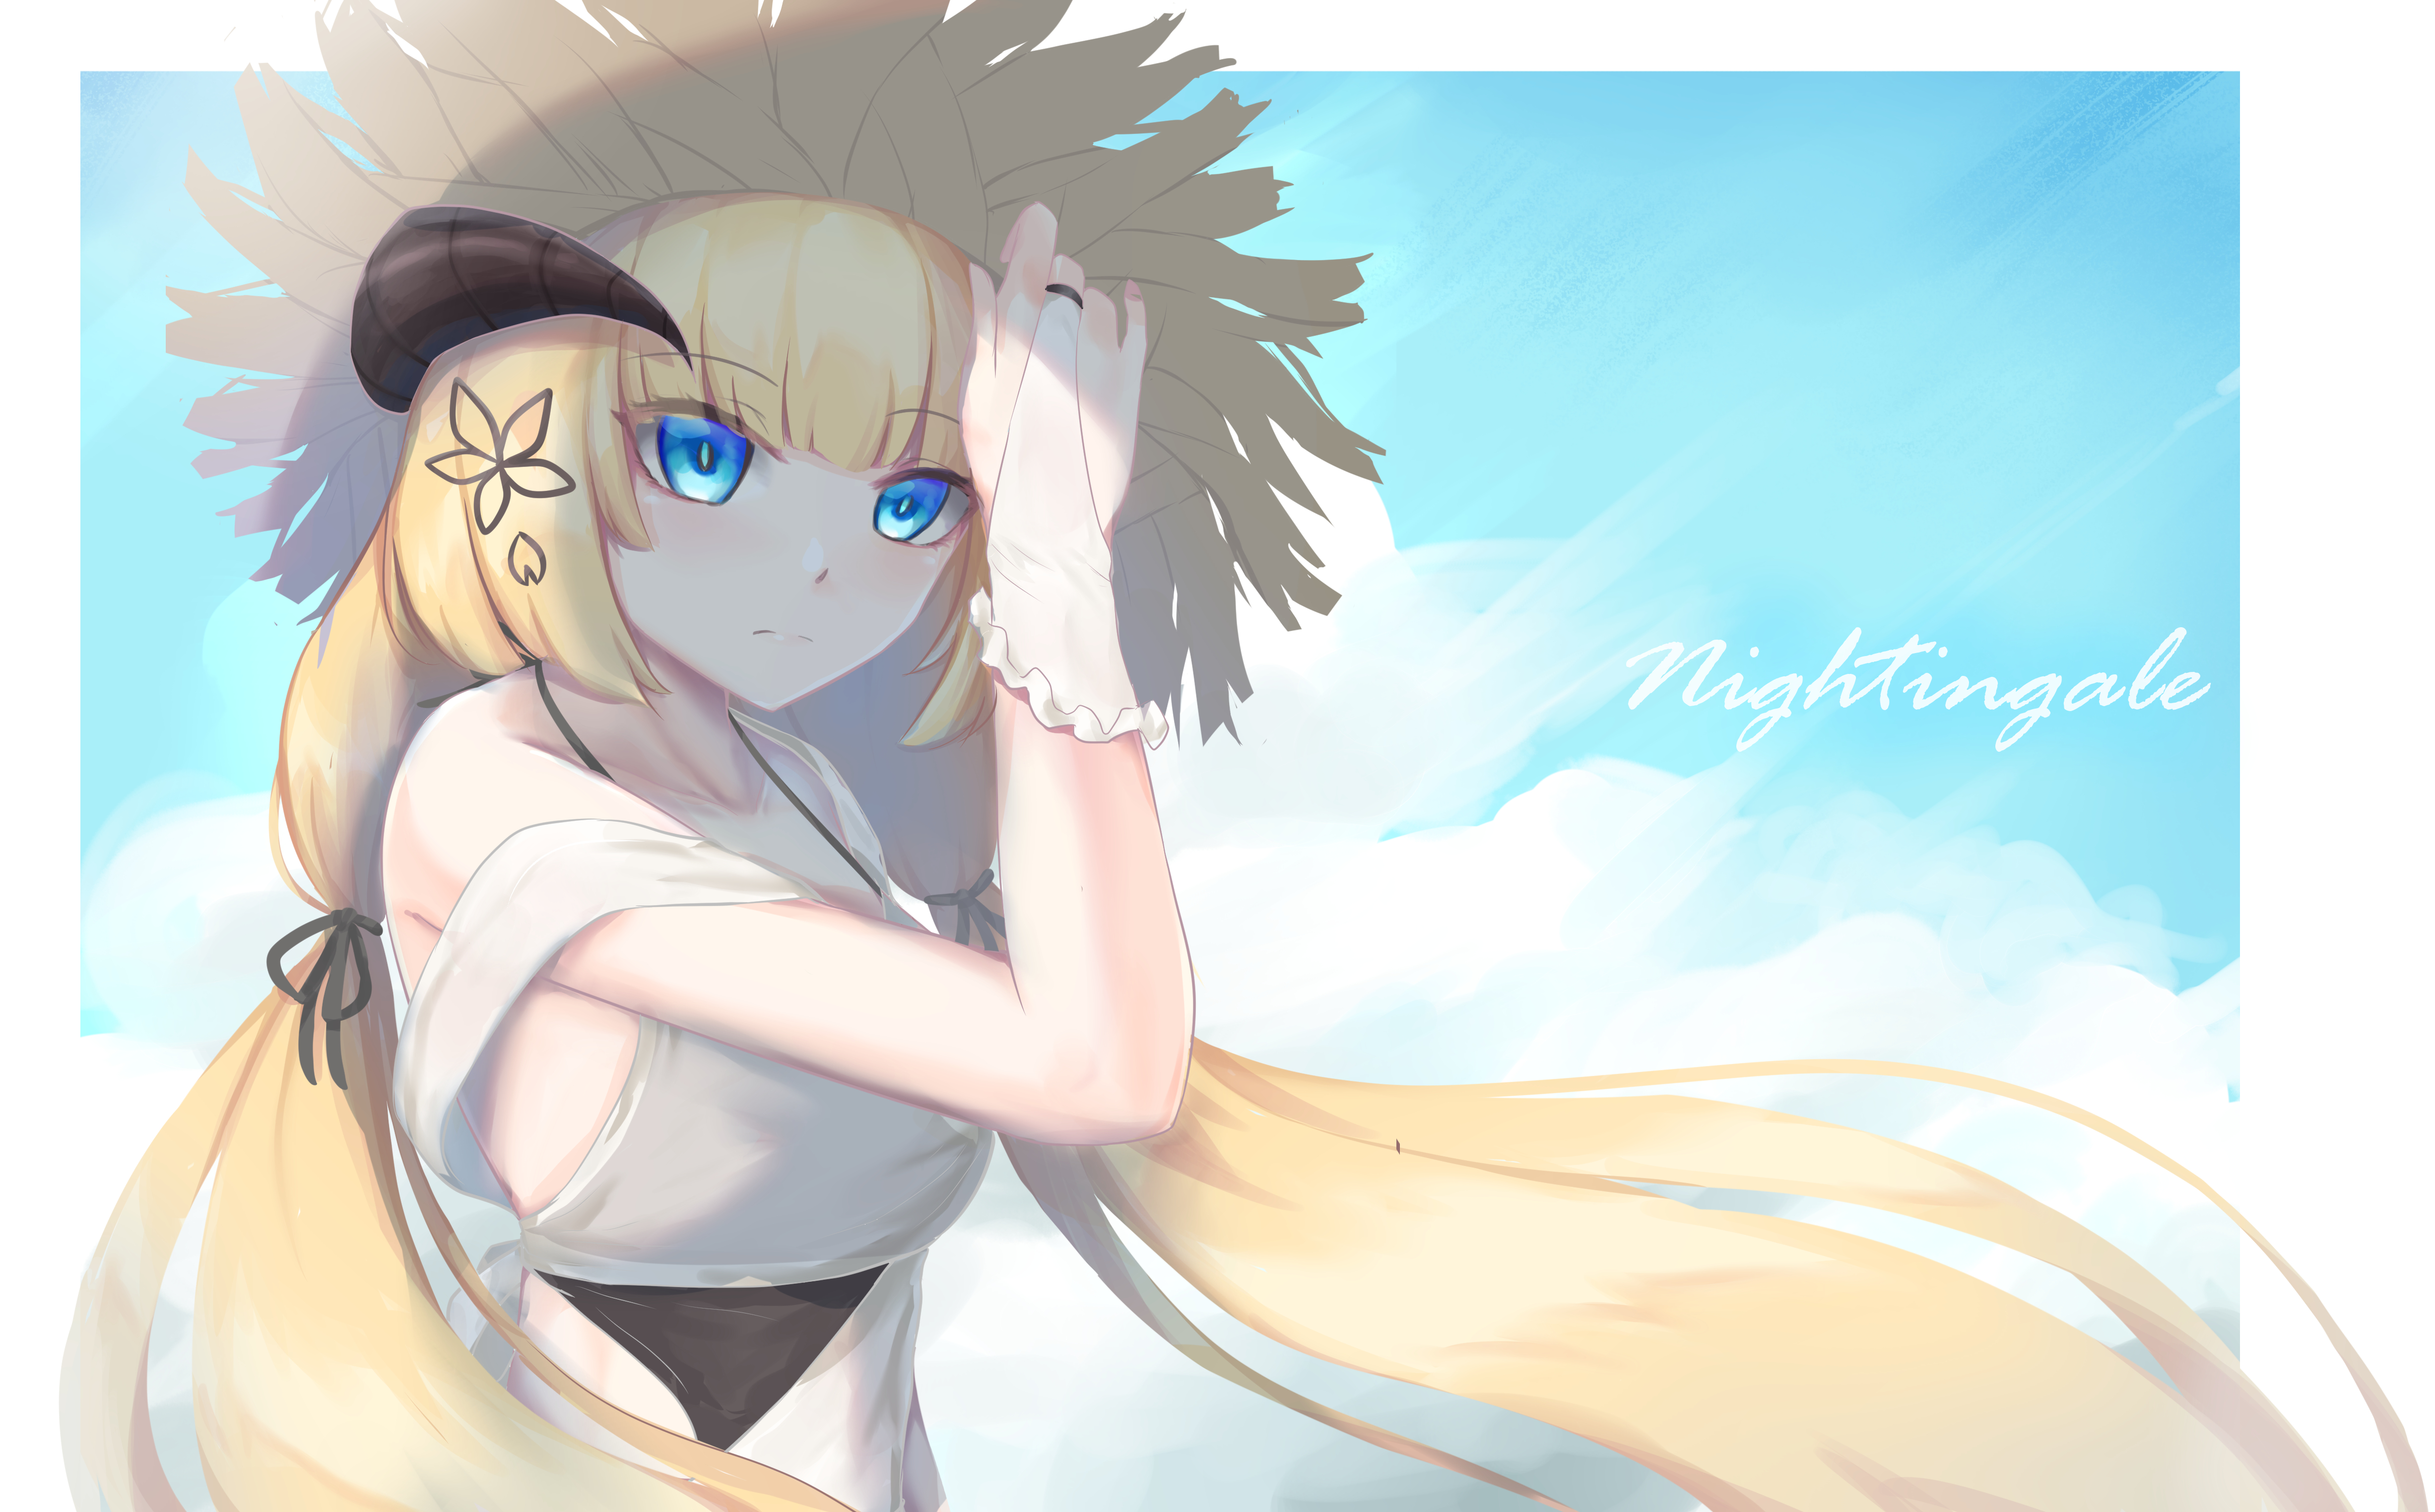 Nightingale summer shine插画图片壁纸